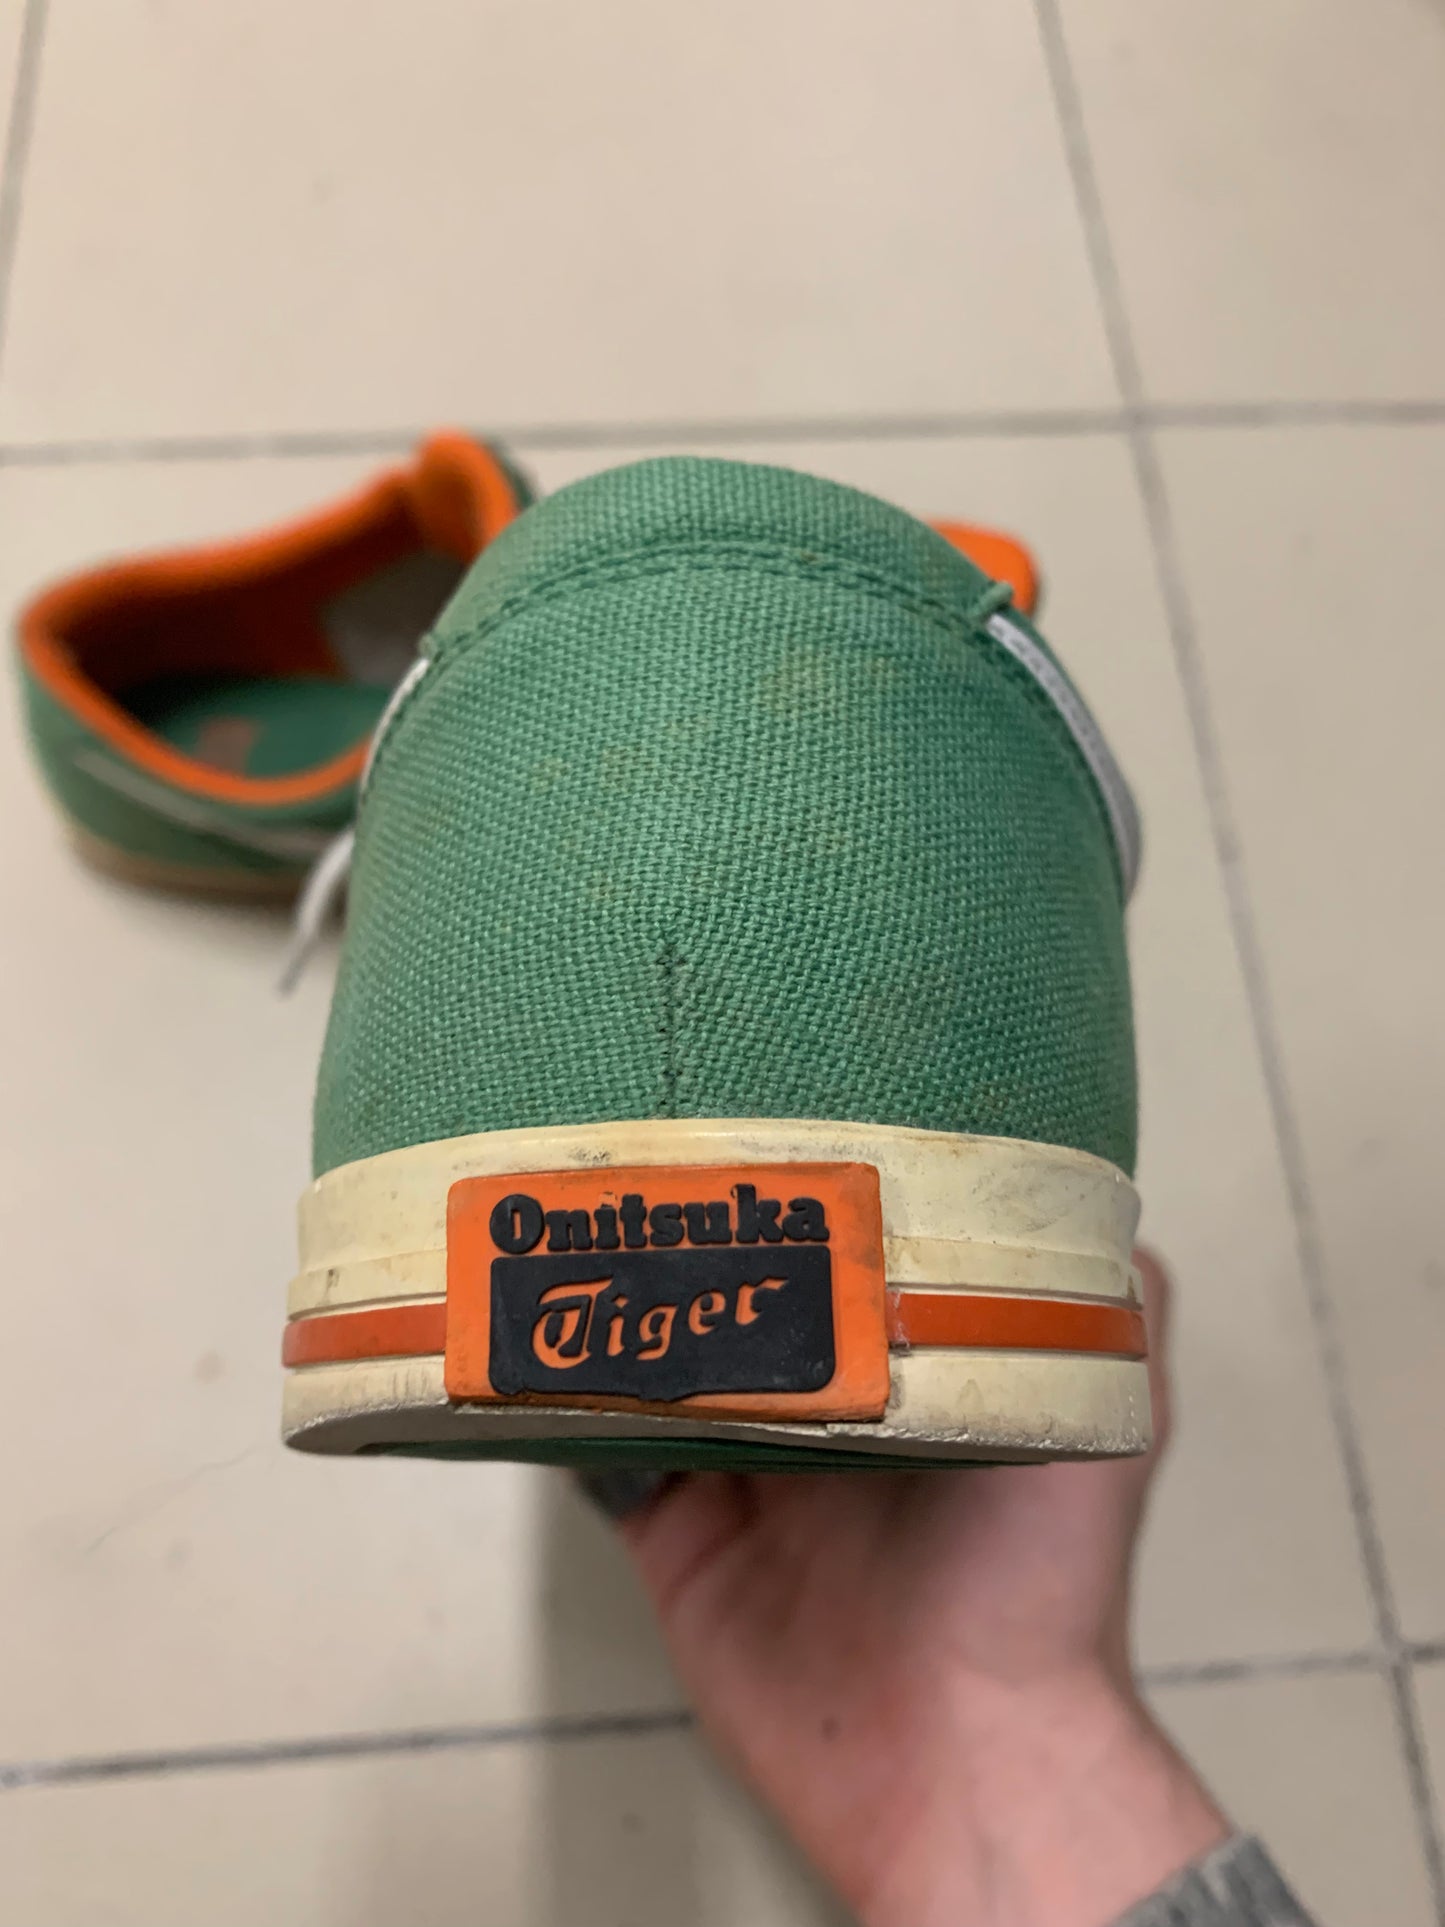 Vintage Asics Onitsika Tiger Sneakers - 41.5